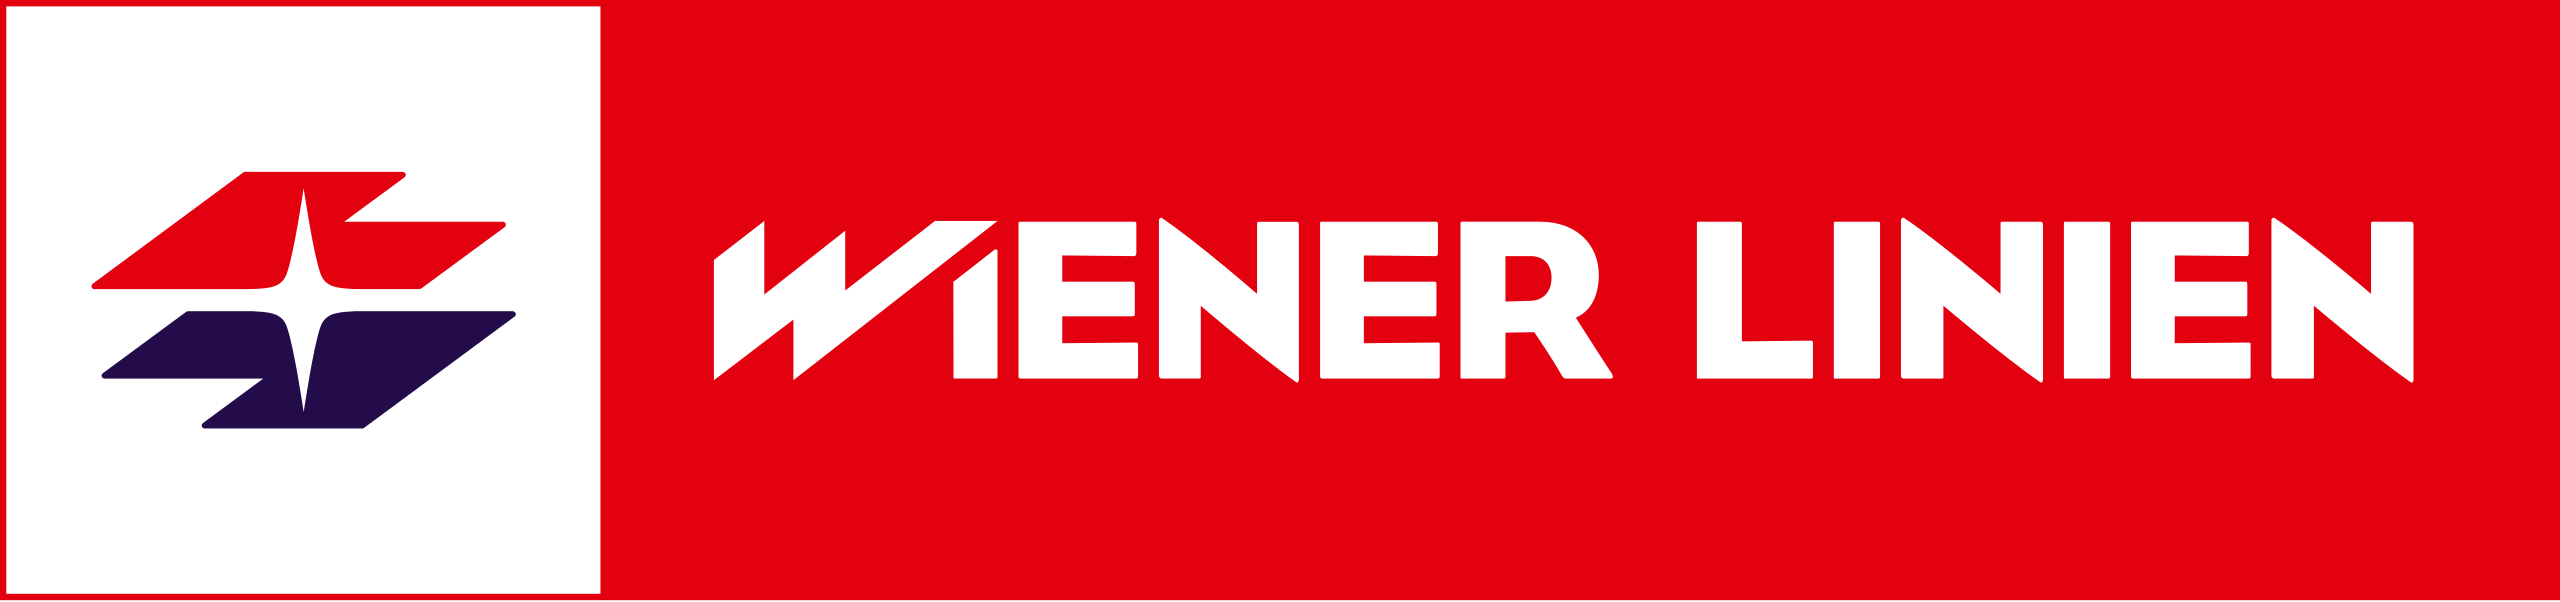 Wiener_Linien_logo.svg